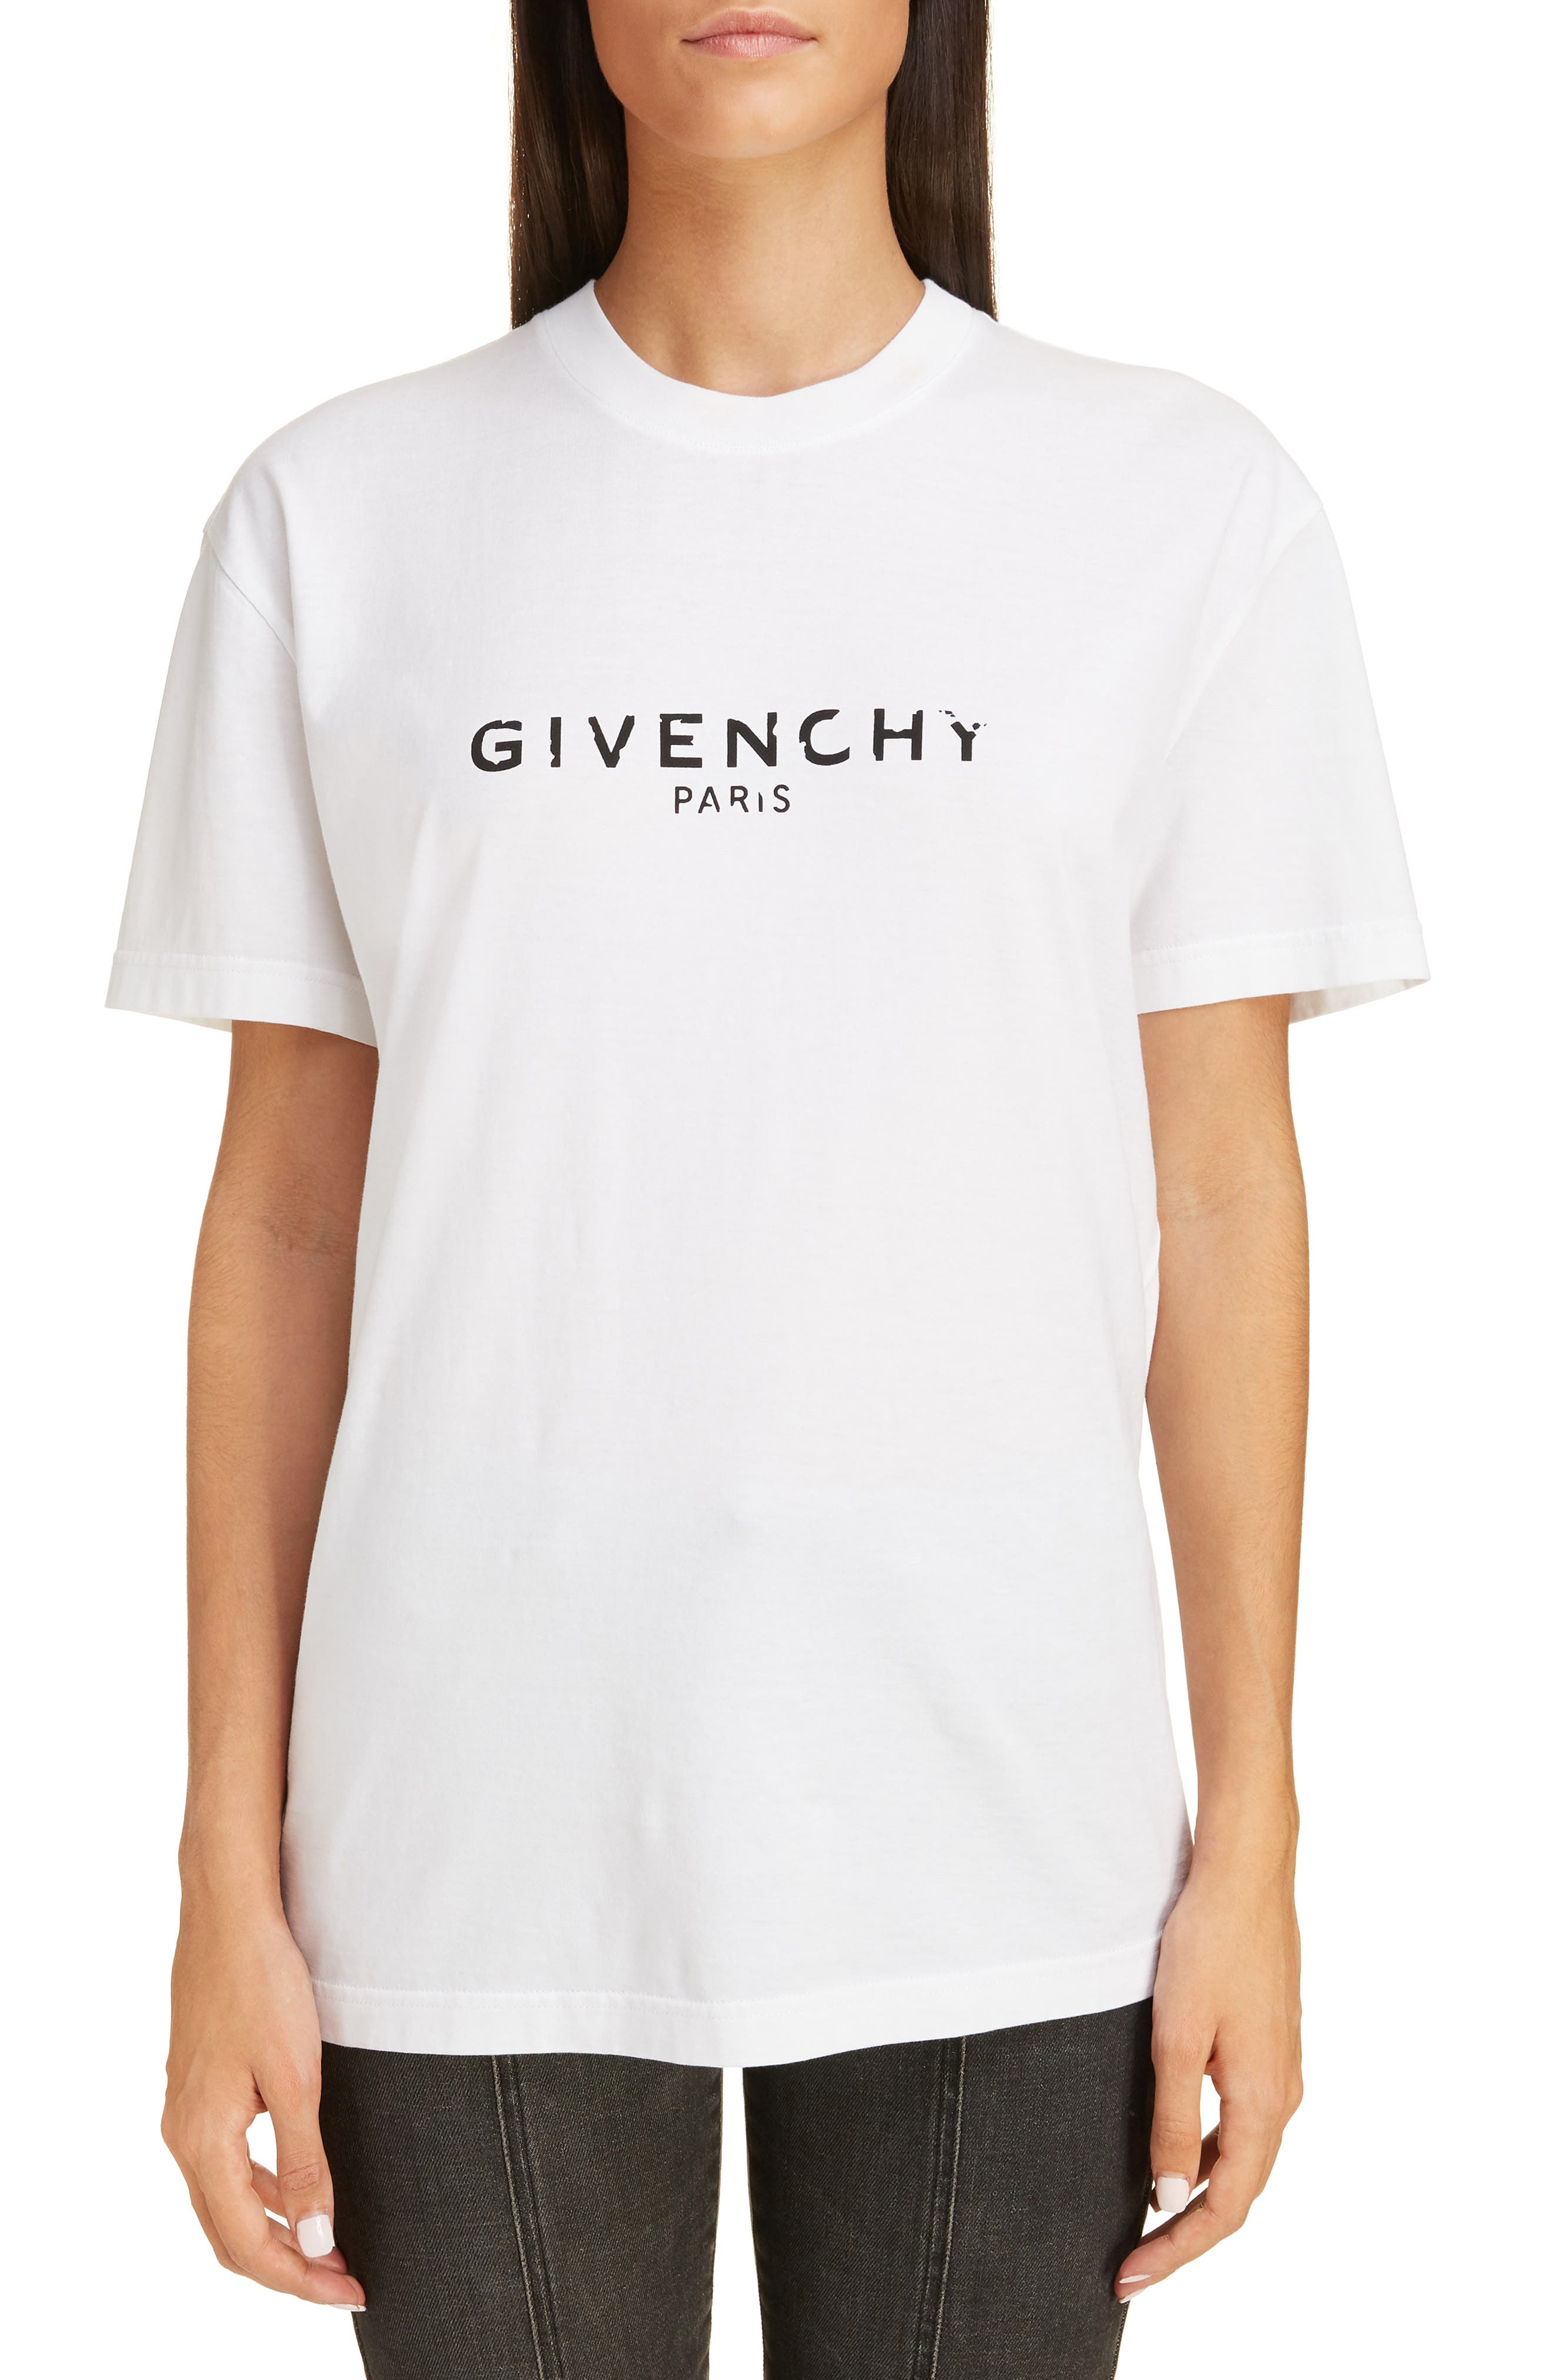 givenchy t shirt women's white